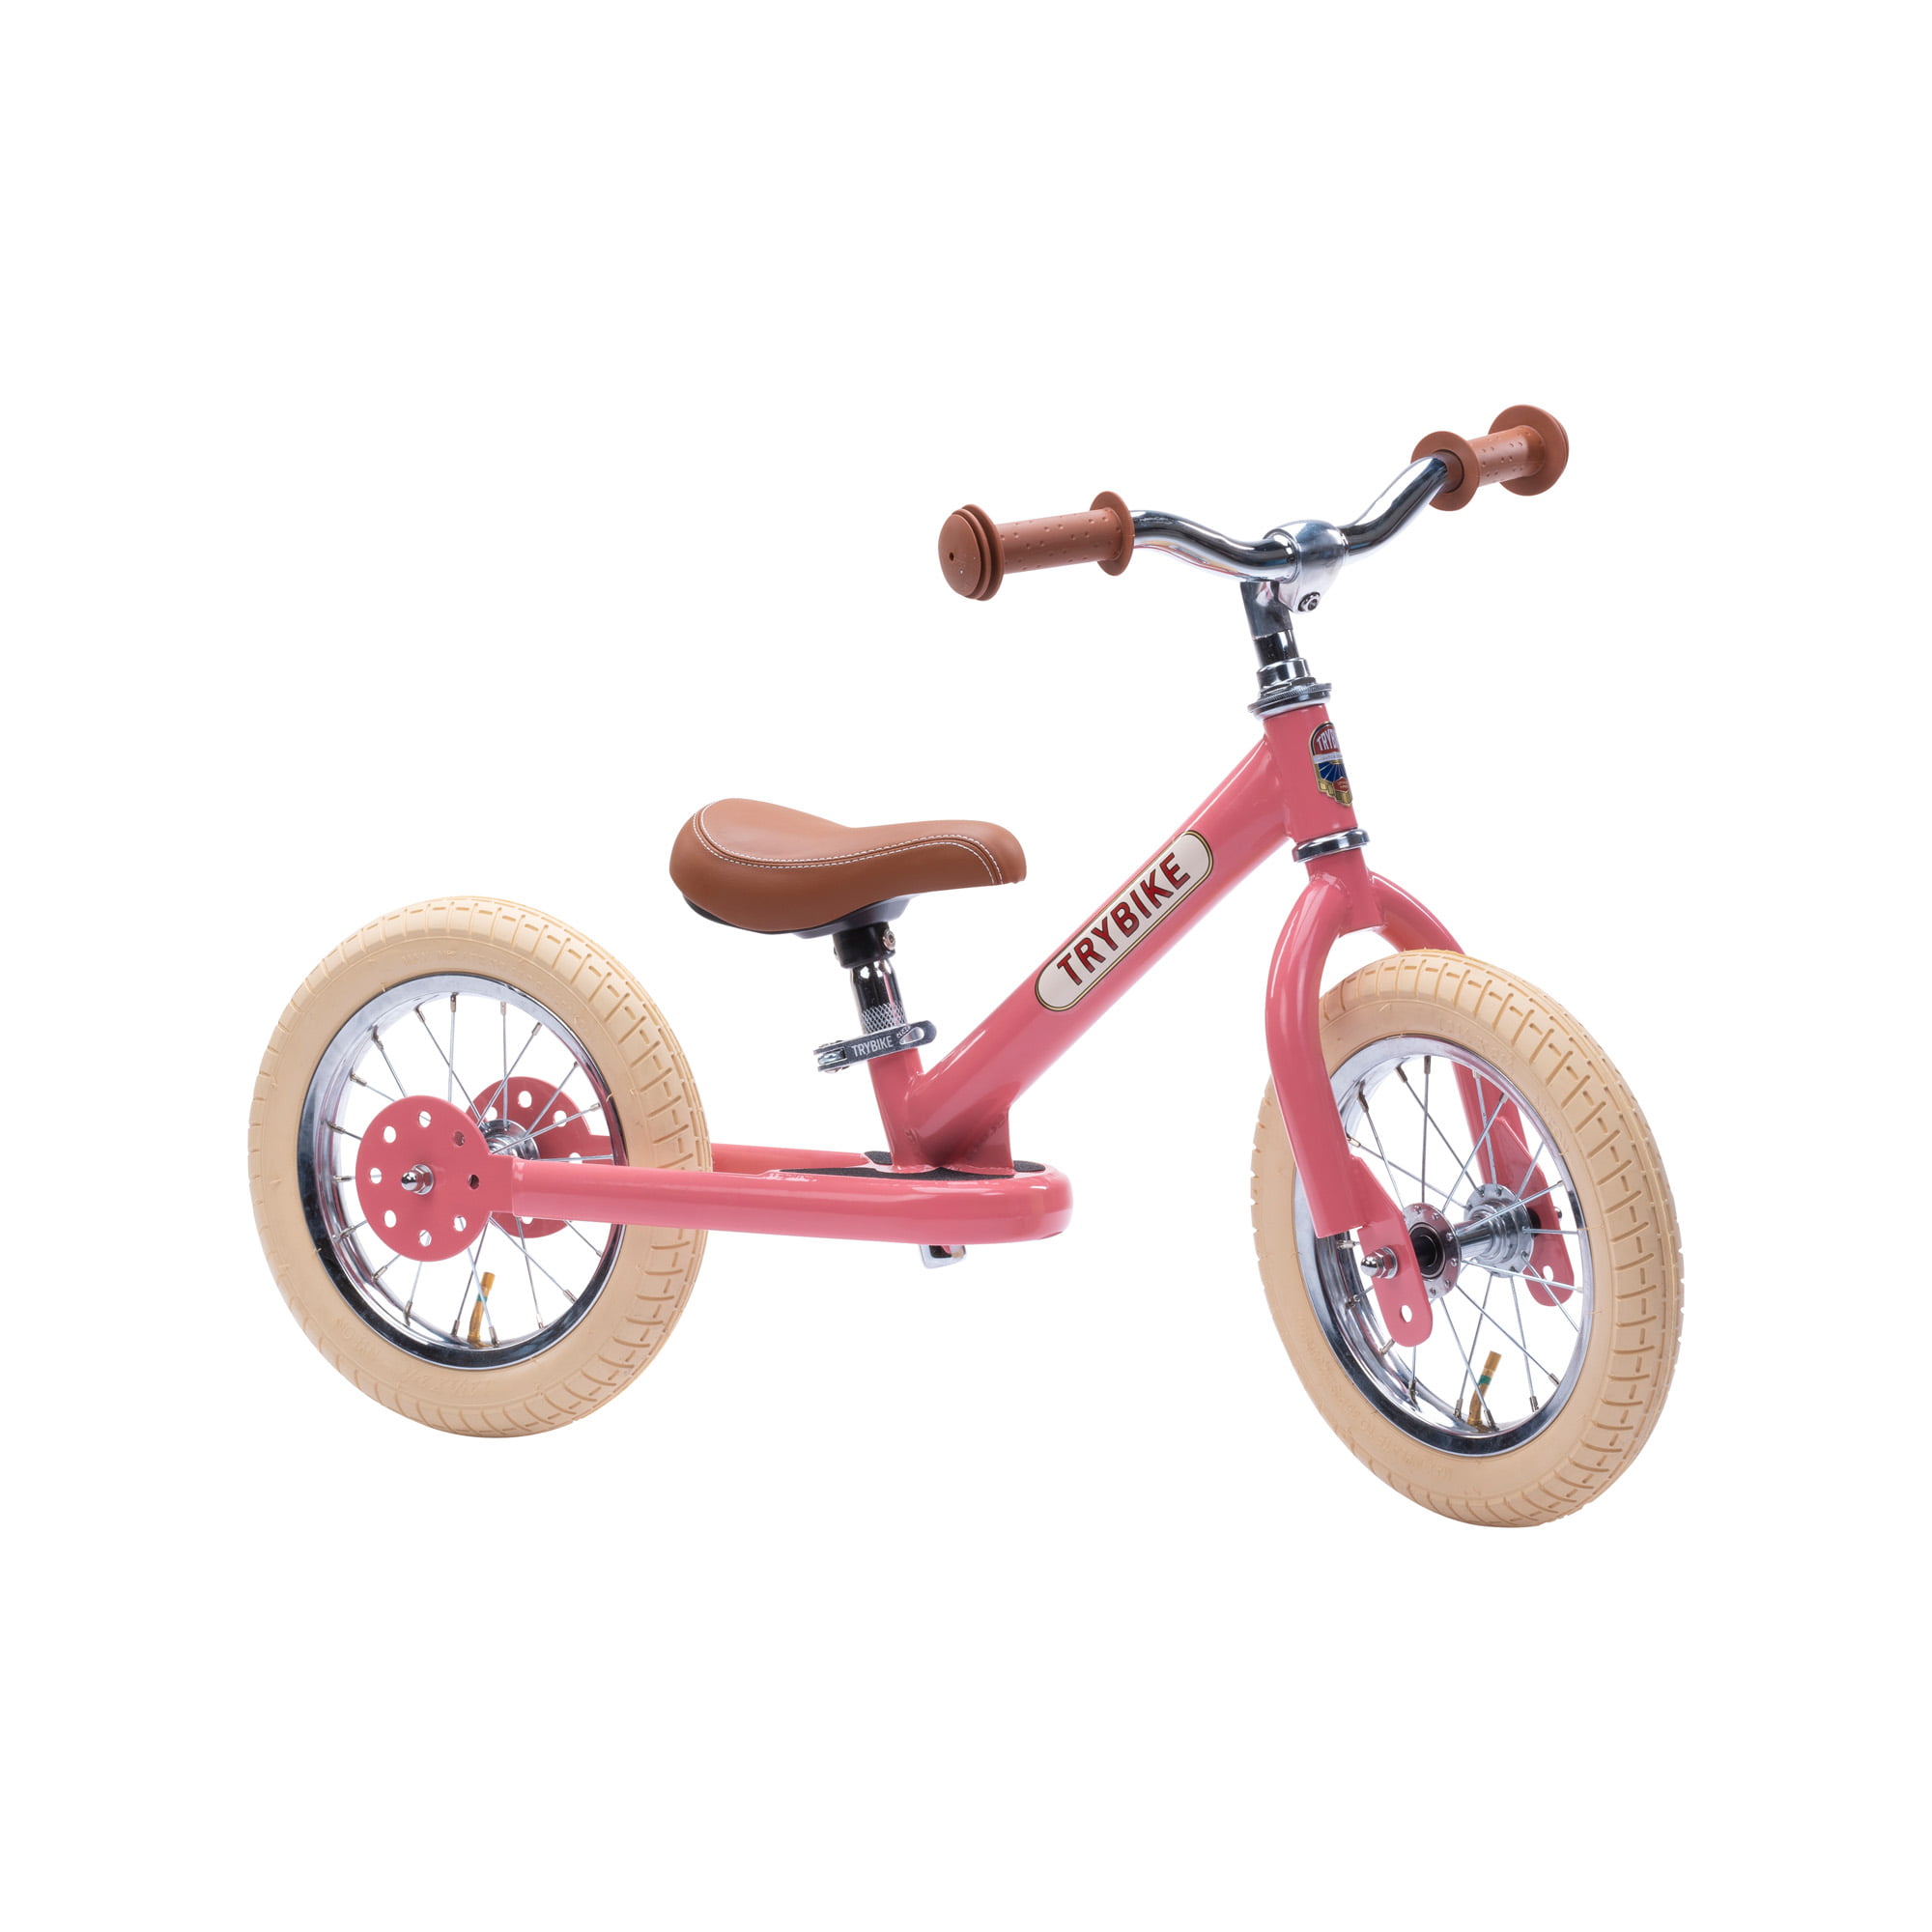 Trybike steel balance bike 2 in 1 – Vintage pink